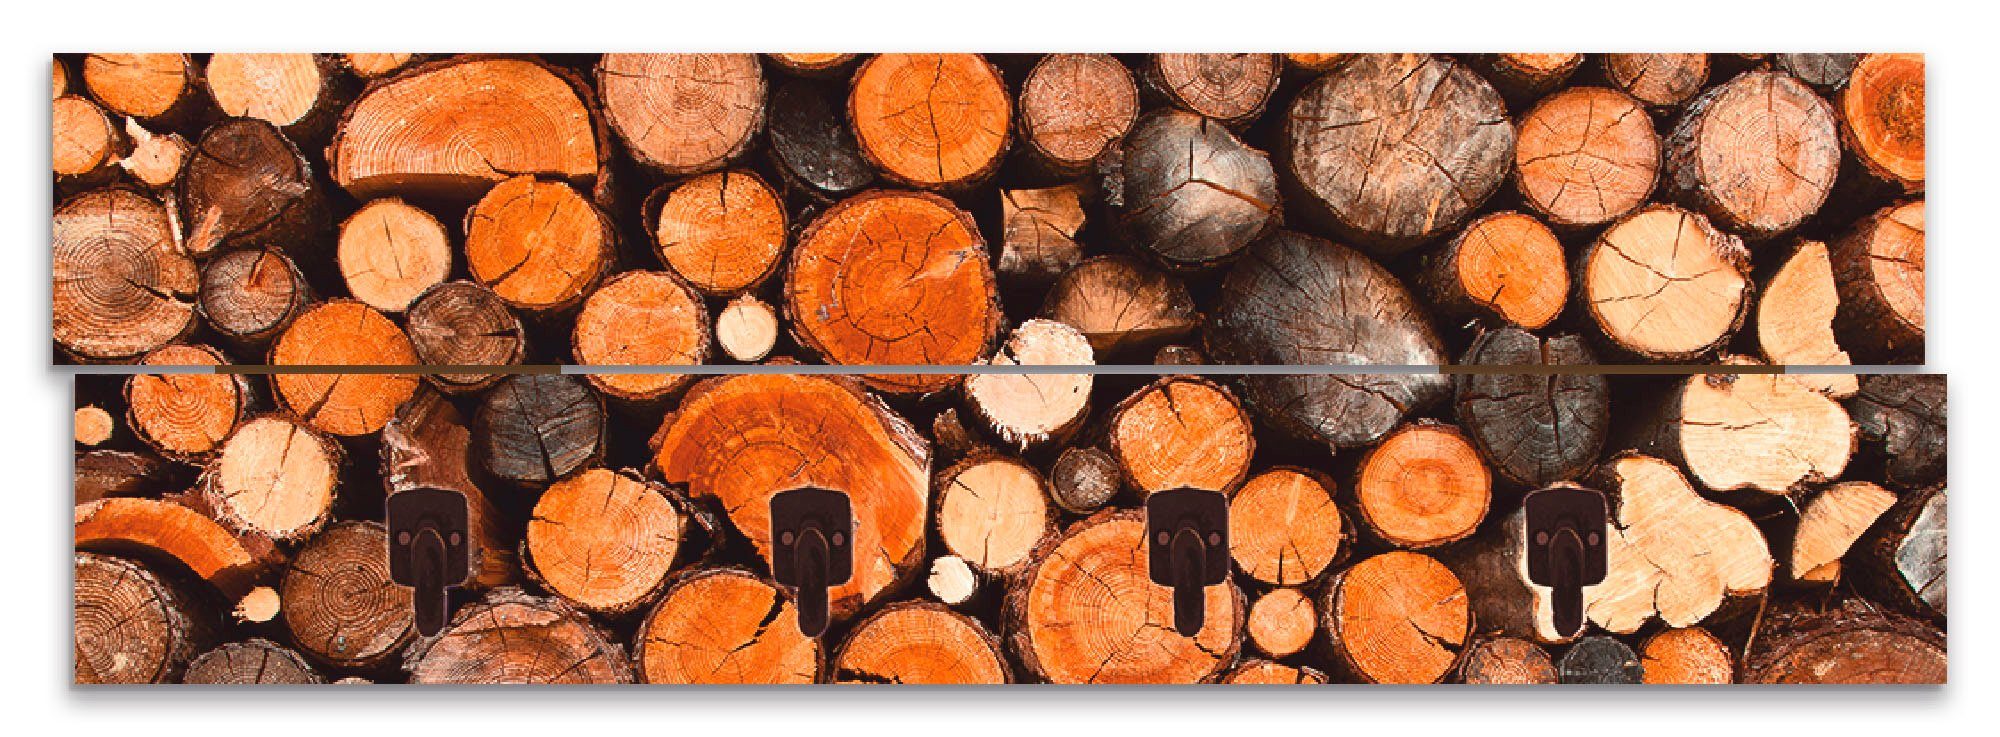 Artland Garderobenleiste Geschichtetes Feuerholz, teilmontiert